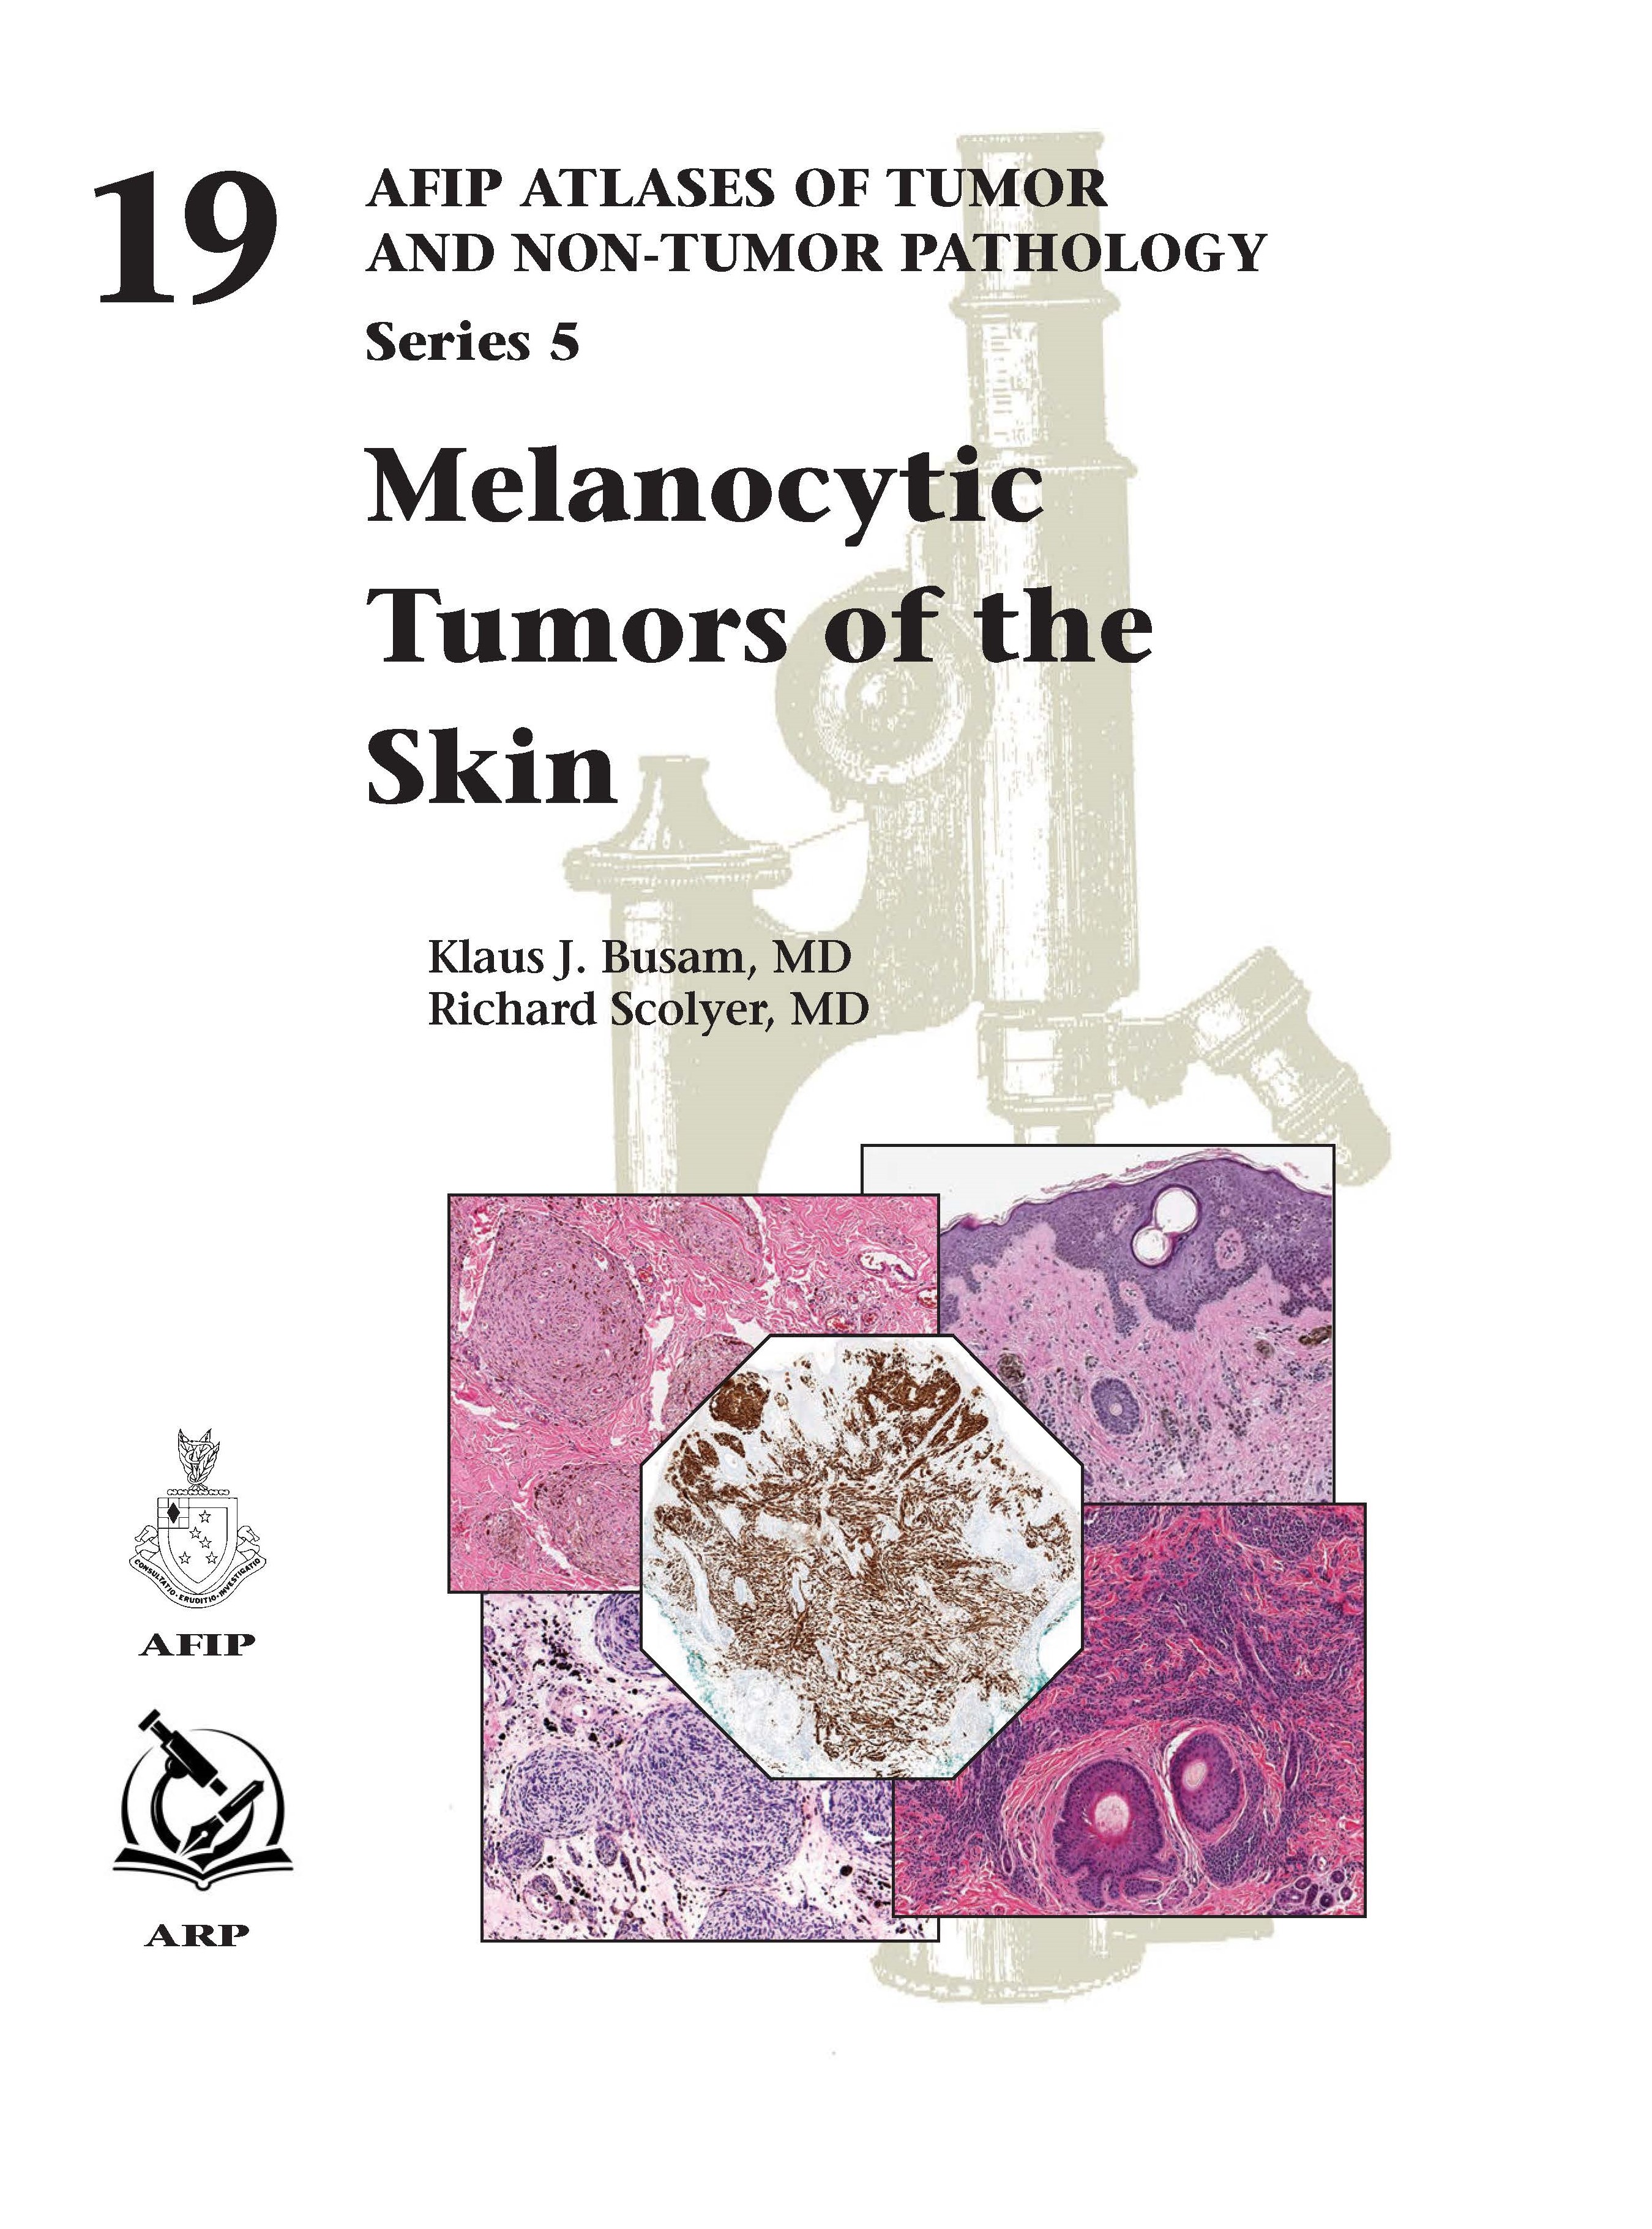 Atlases of Tumor & Non-Tumor Pathology, 5th Series,Fascicle 19- Melanocytic Tumors of Skin